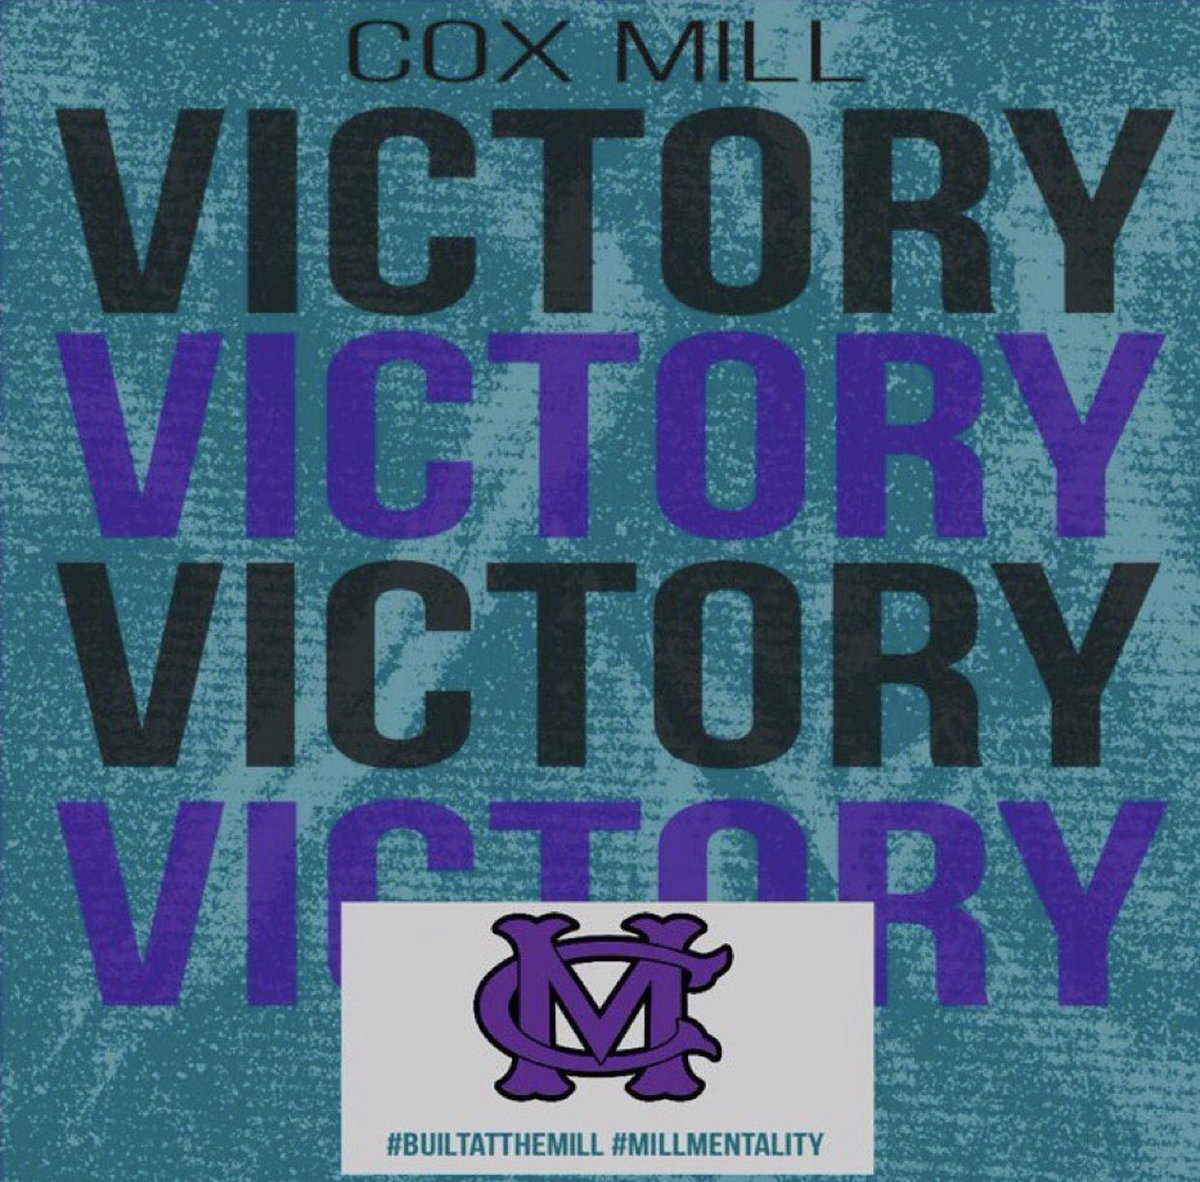 🏀 Final: Cox Mill: 70 Weddington: 62 Chargers are led by @_djboyce_(19) @LangstonBoyd_ (18) and @seandunn0 (16) #BuiltAtTheMill #MillMentality